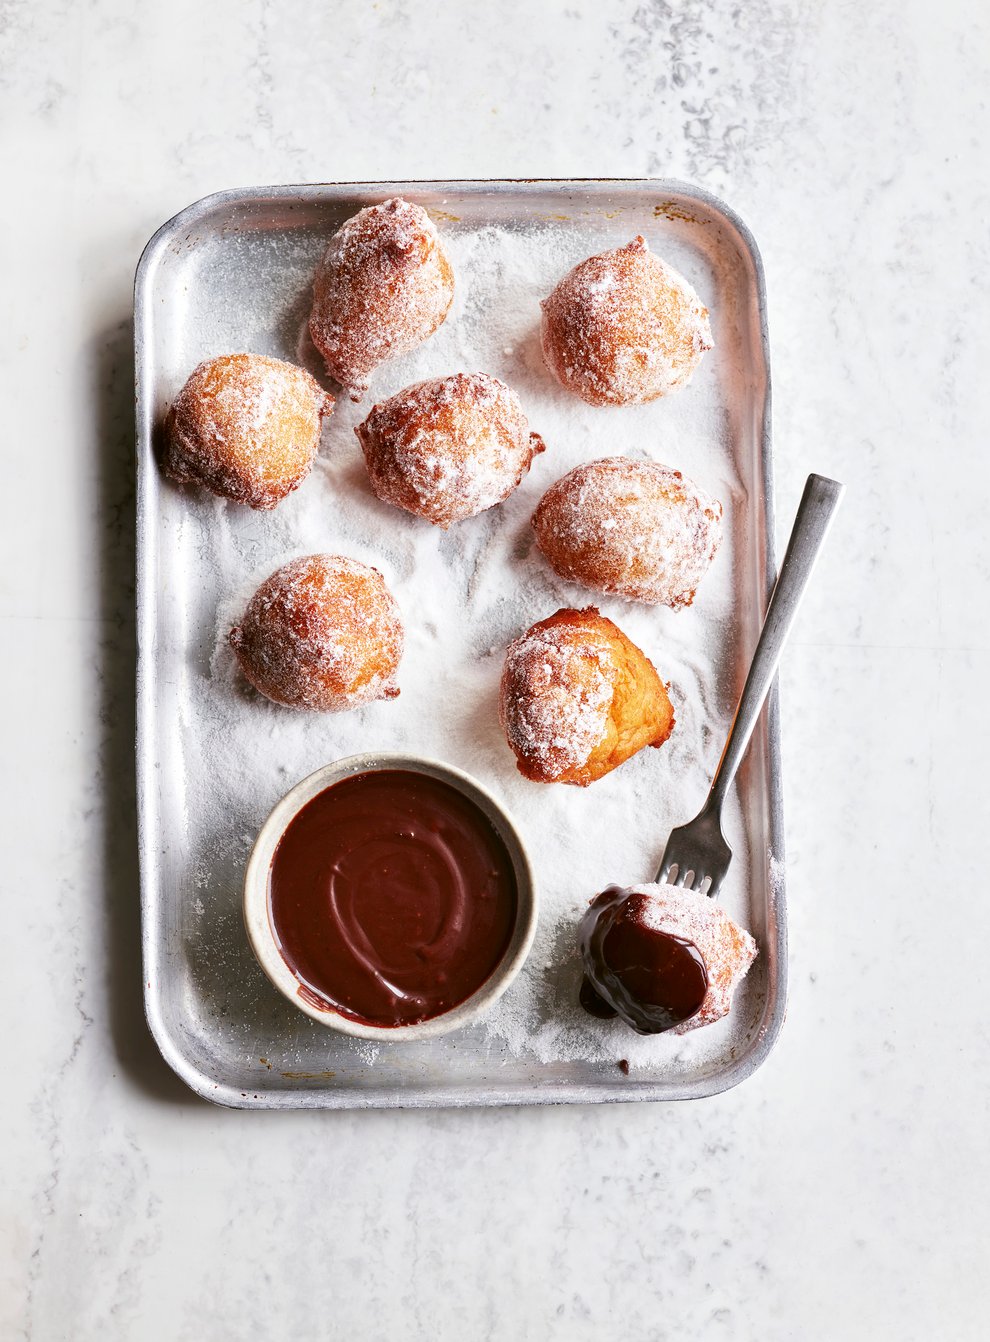 Gordon Ramsay’s mini cinnamon doughnuts with chilli chocolate dipping sauce